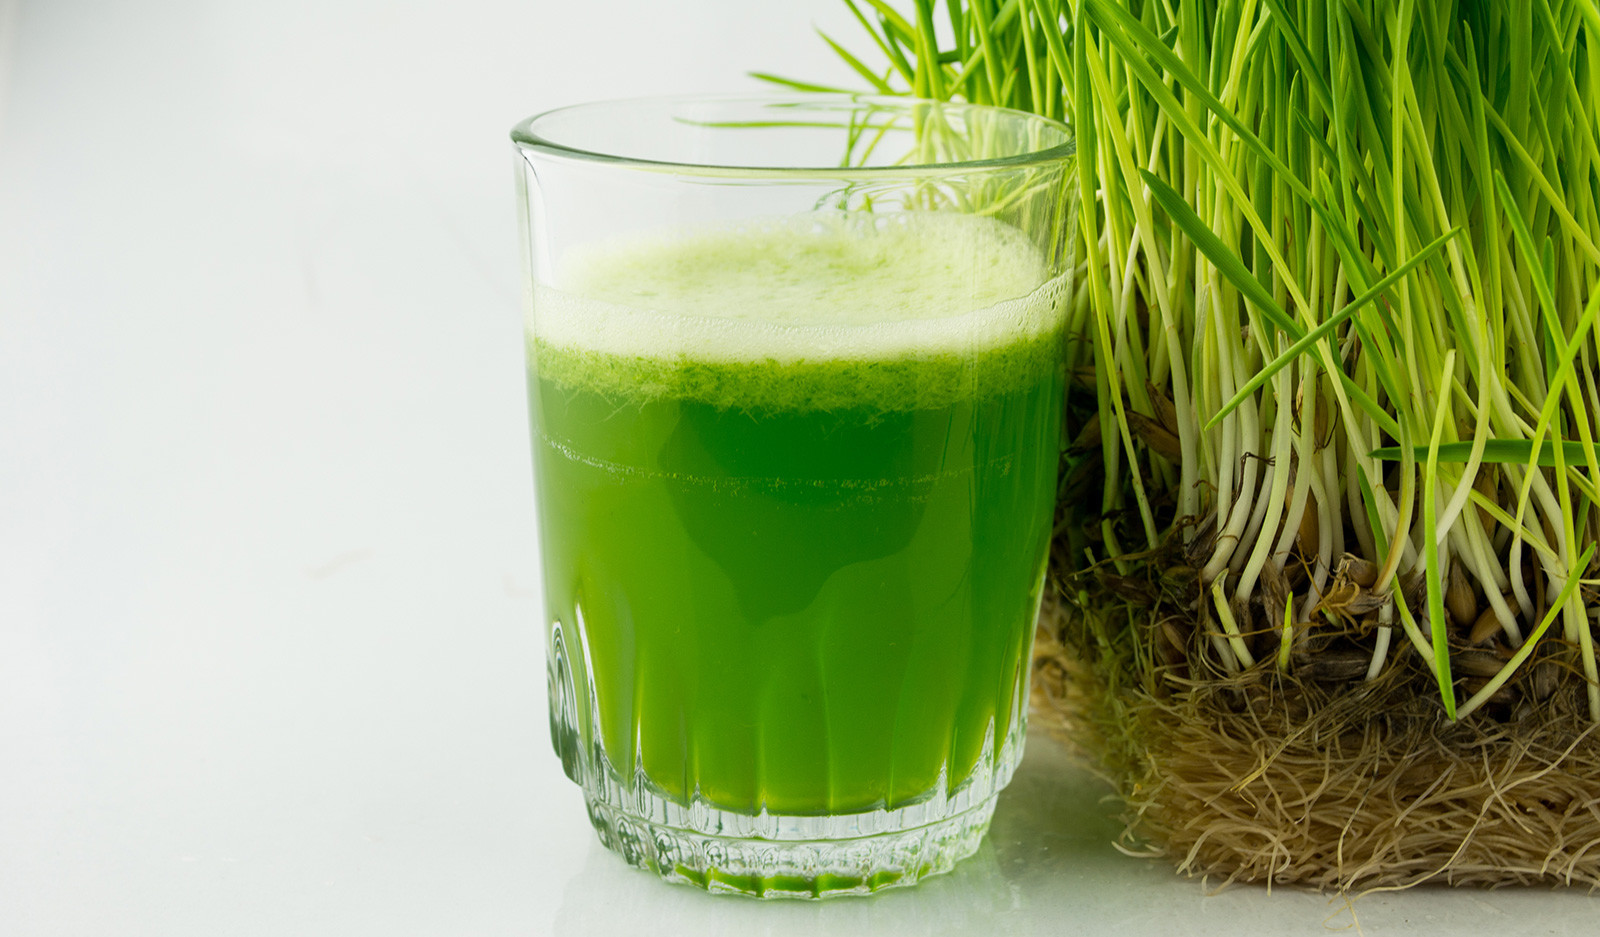 Organic, green wheat-grass juice in a glass.